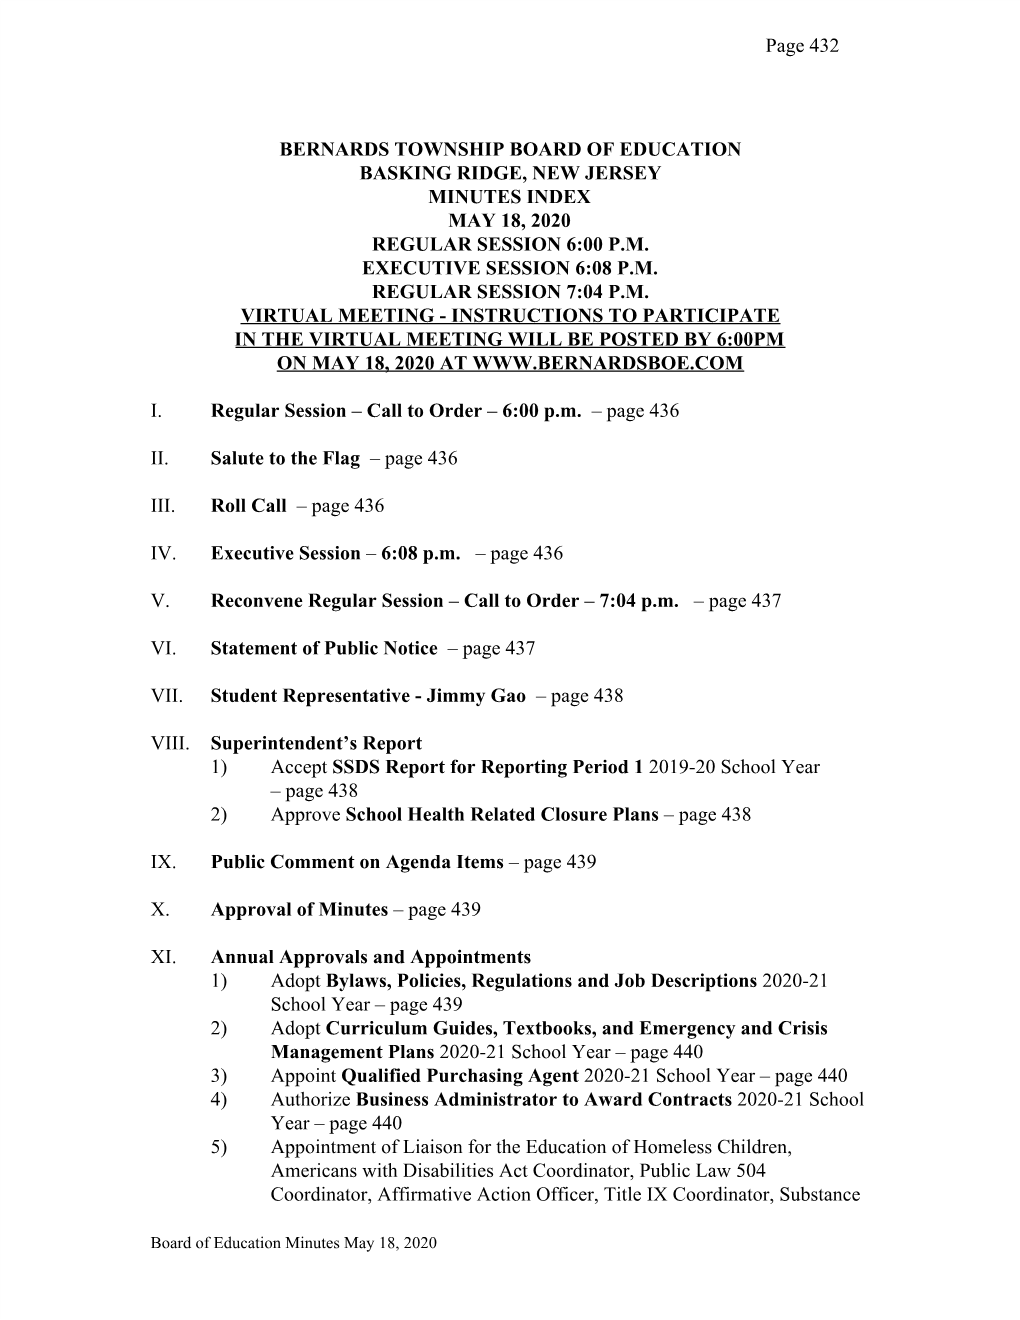 Bernards Township Board of Education Basking Ridge, New Jersey Minutes Index May 18, 2020 Regular Session 6:00 P.M